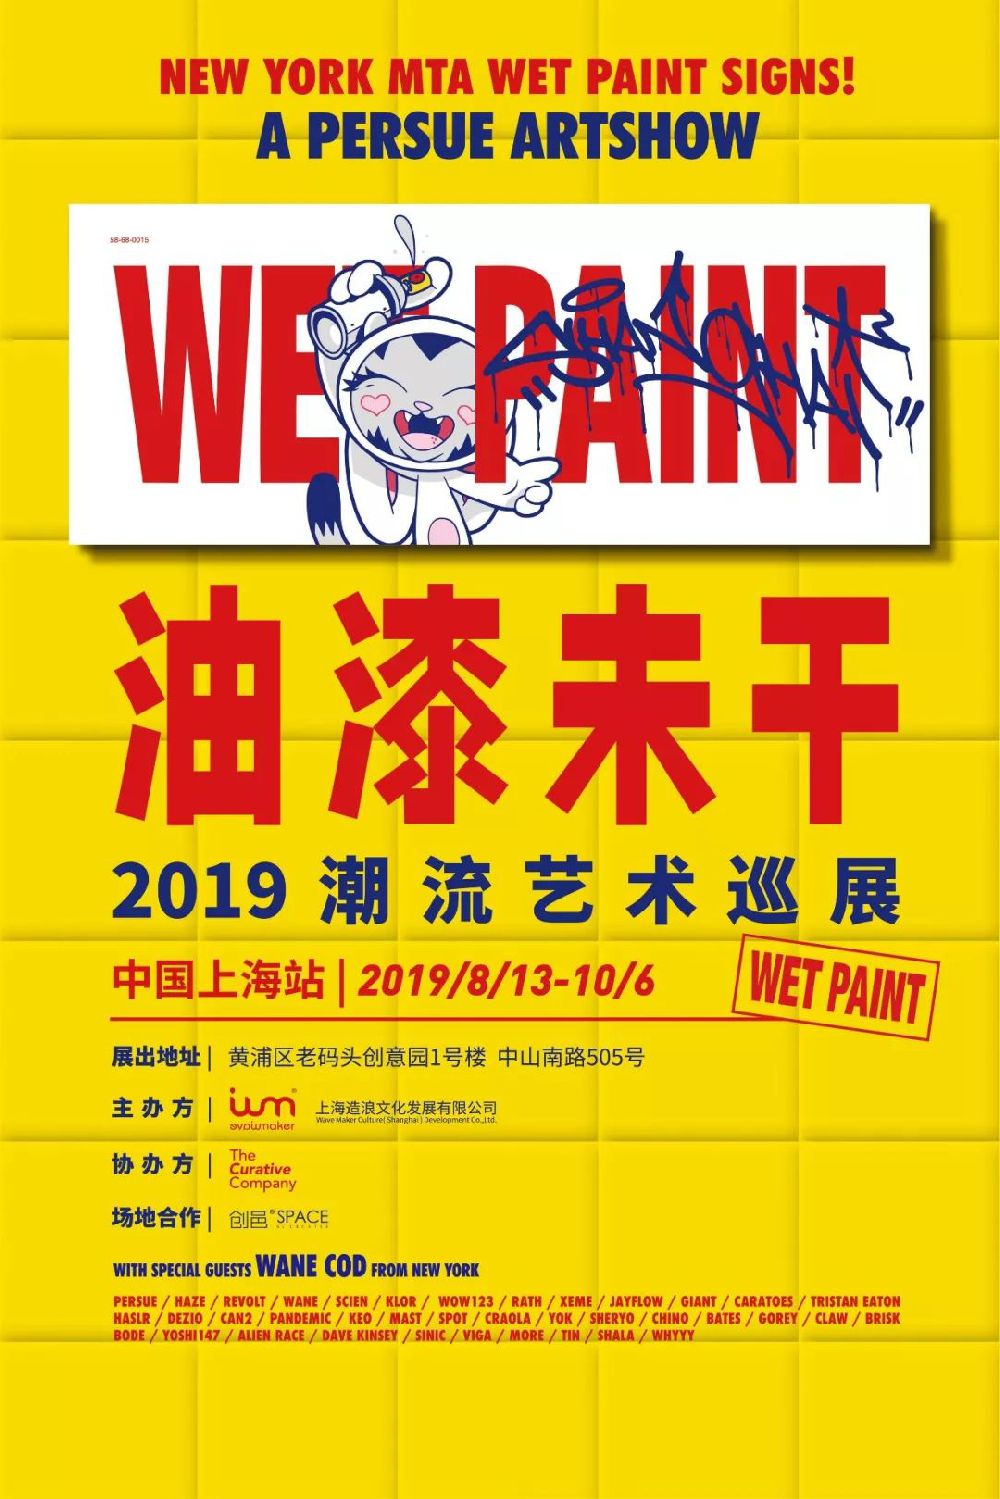 WET PAINT 油漆未干潮流艺术巡展上海站